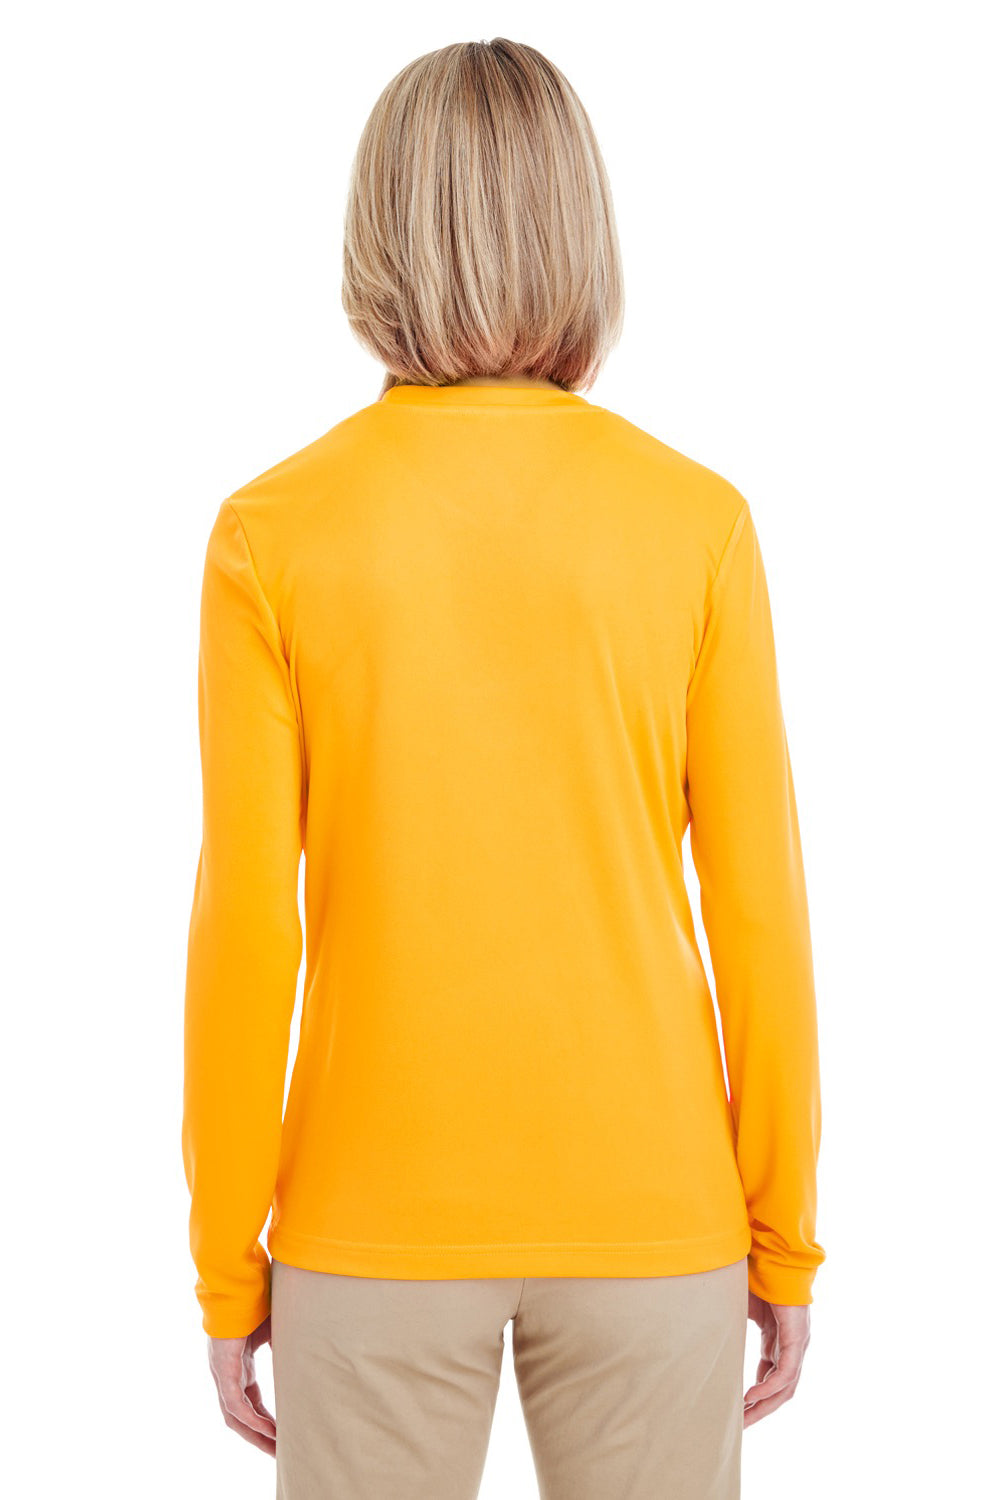 UltraClub 8622W Womens Cool & Dry Performance Moisture Wicking Long Sleeve Crewneck T-Shirt Gold Back